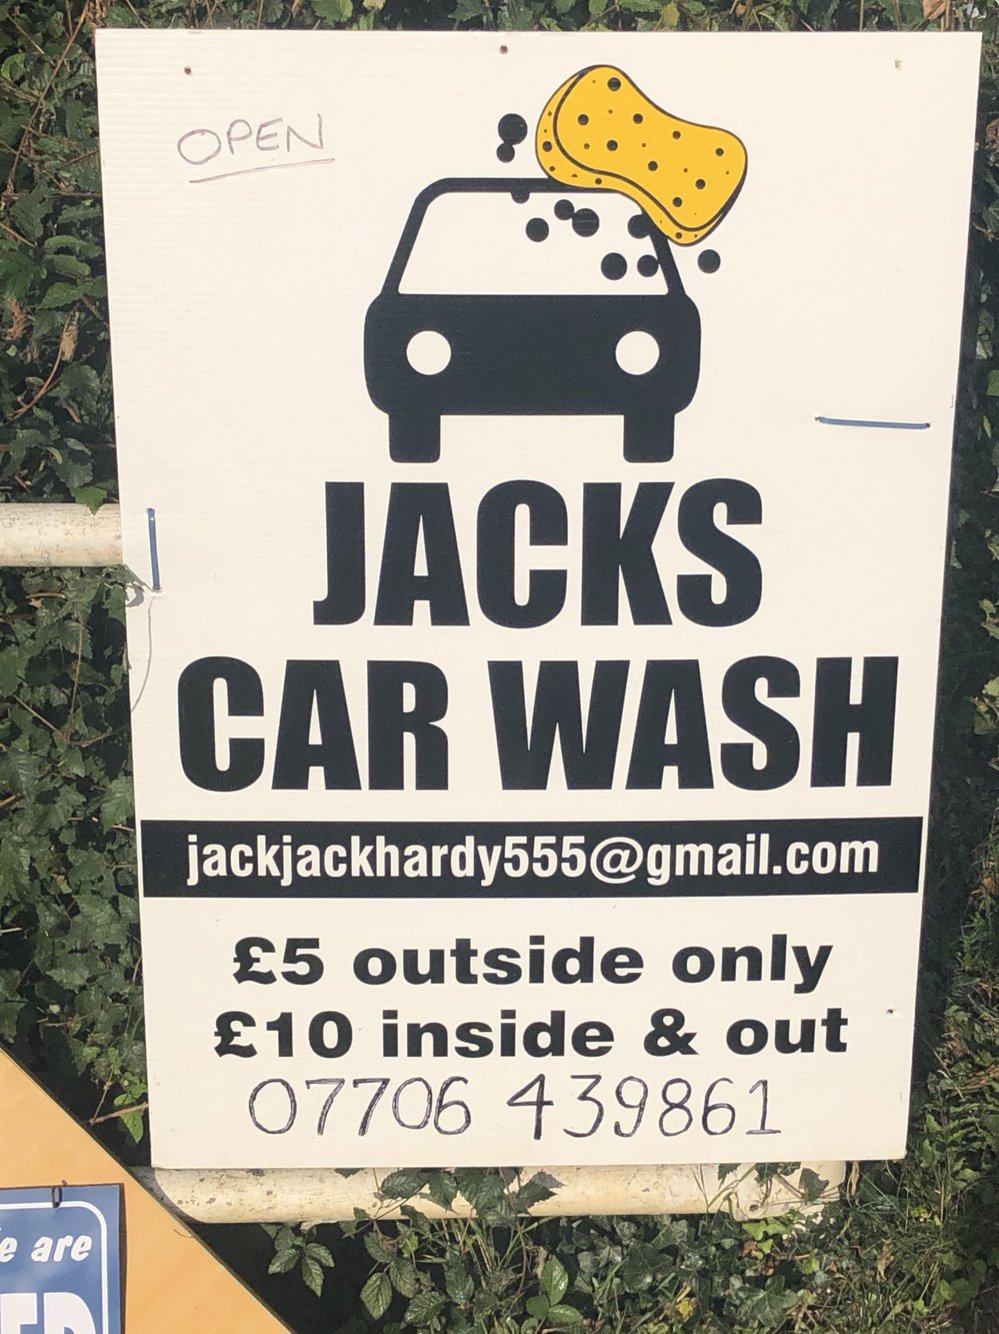 Jacks carwash service  cover